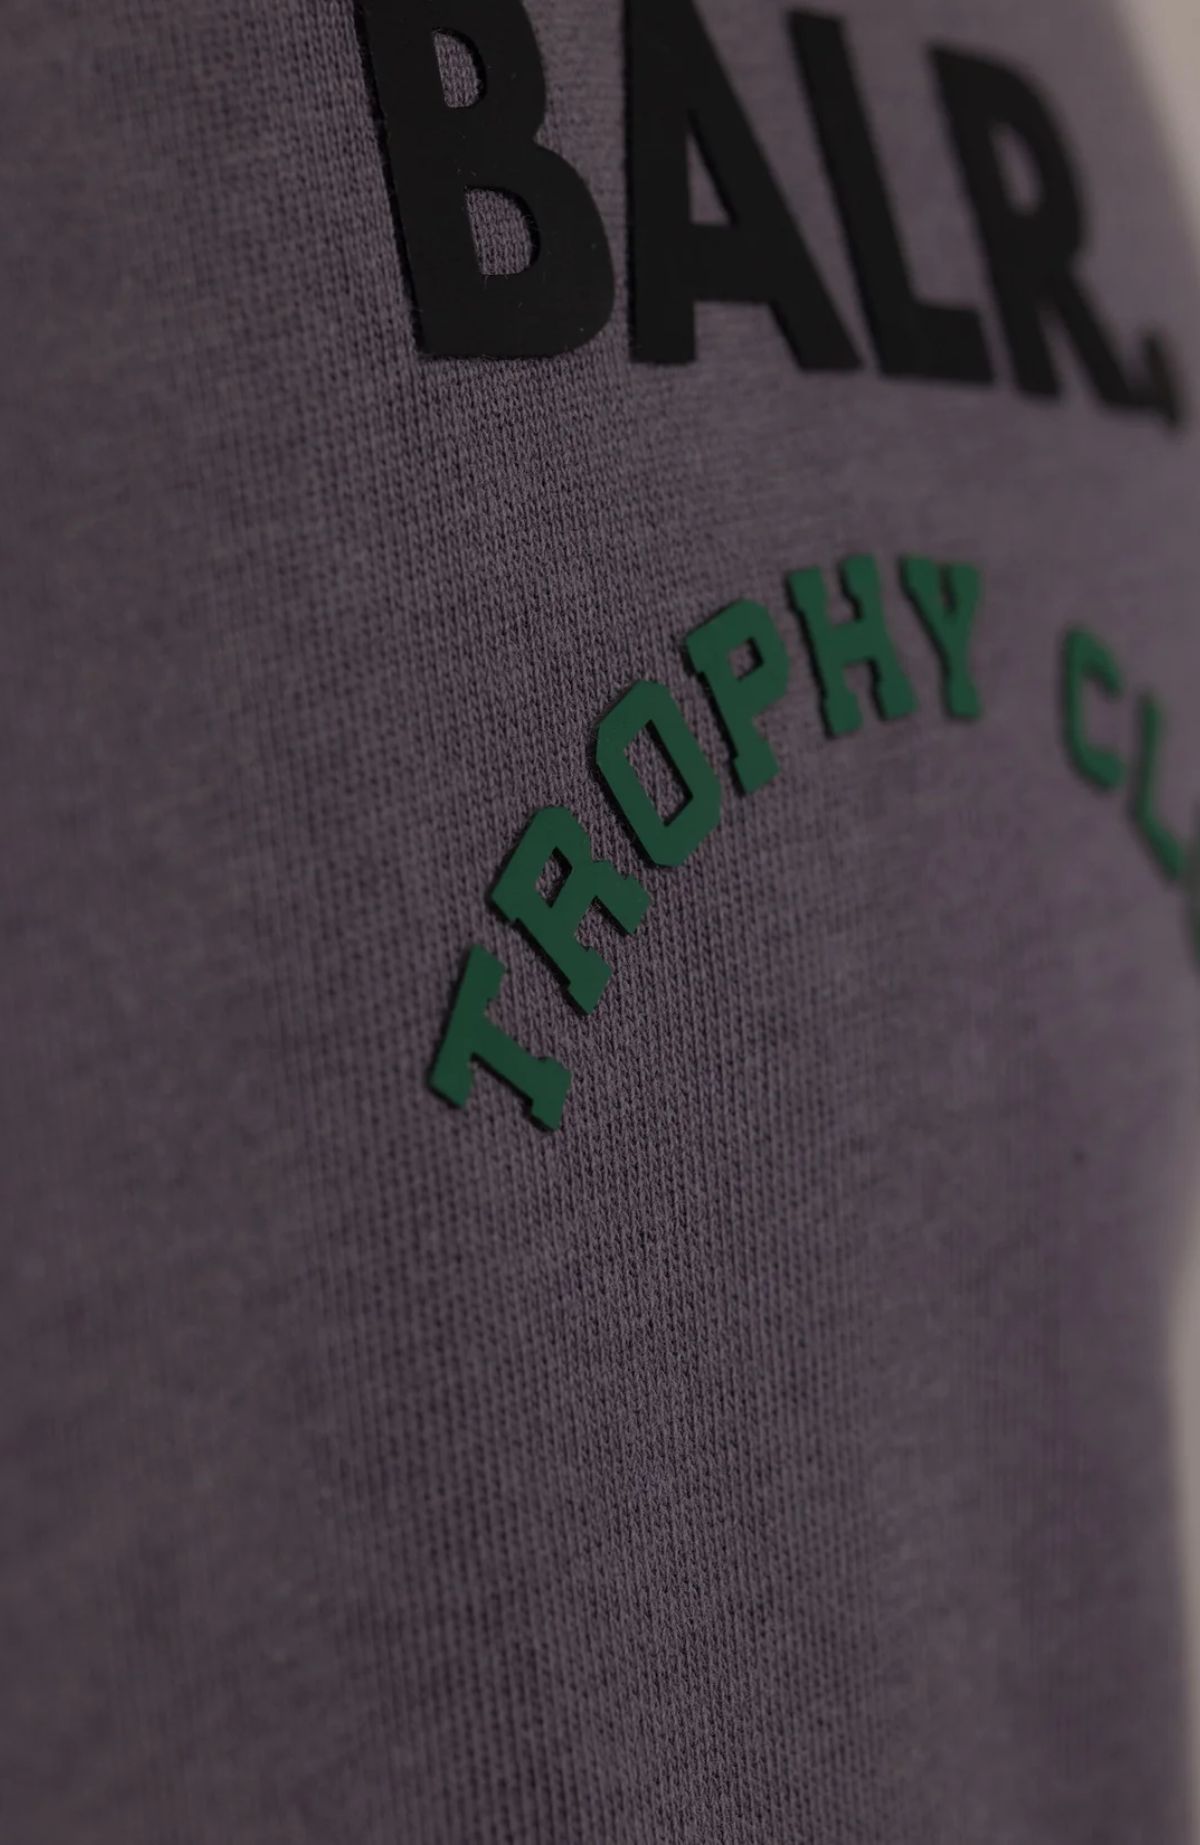 Olaf Straight Washed Trophy Club T-Shirt - Maxx Group